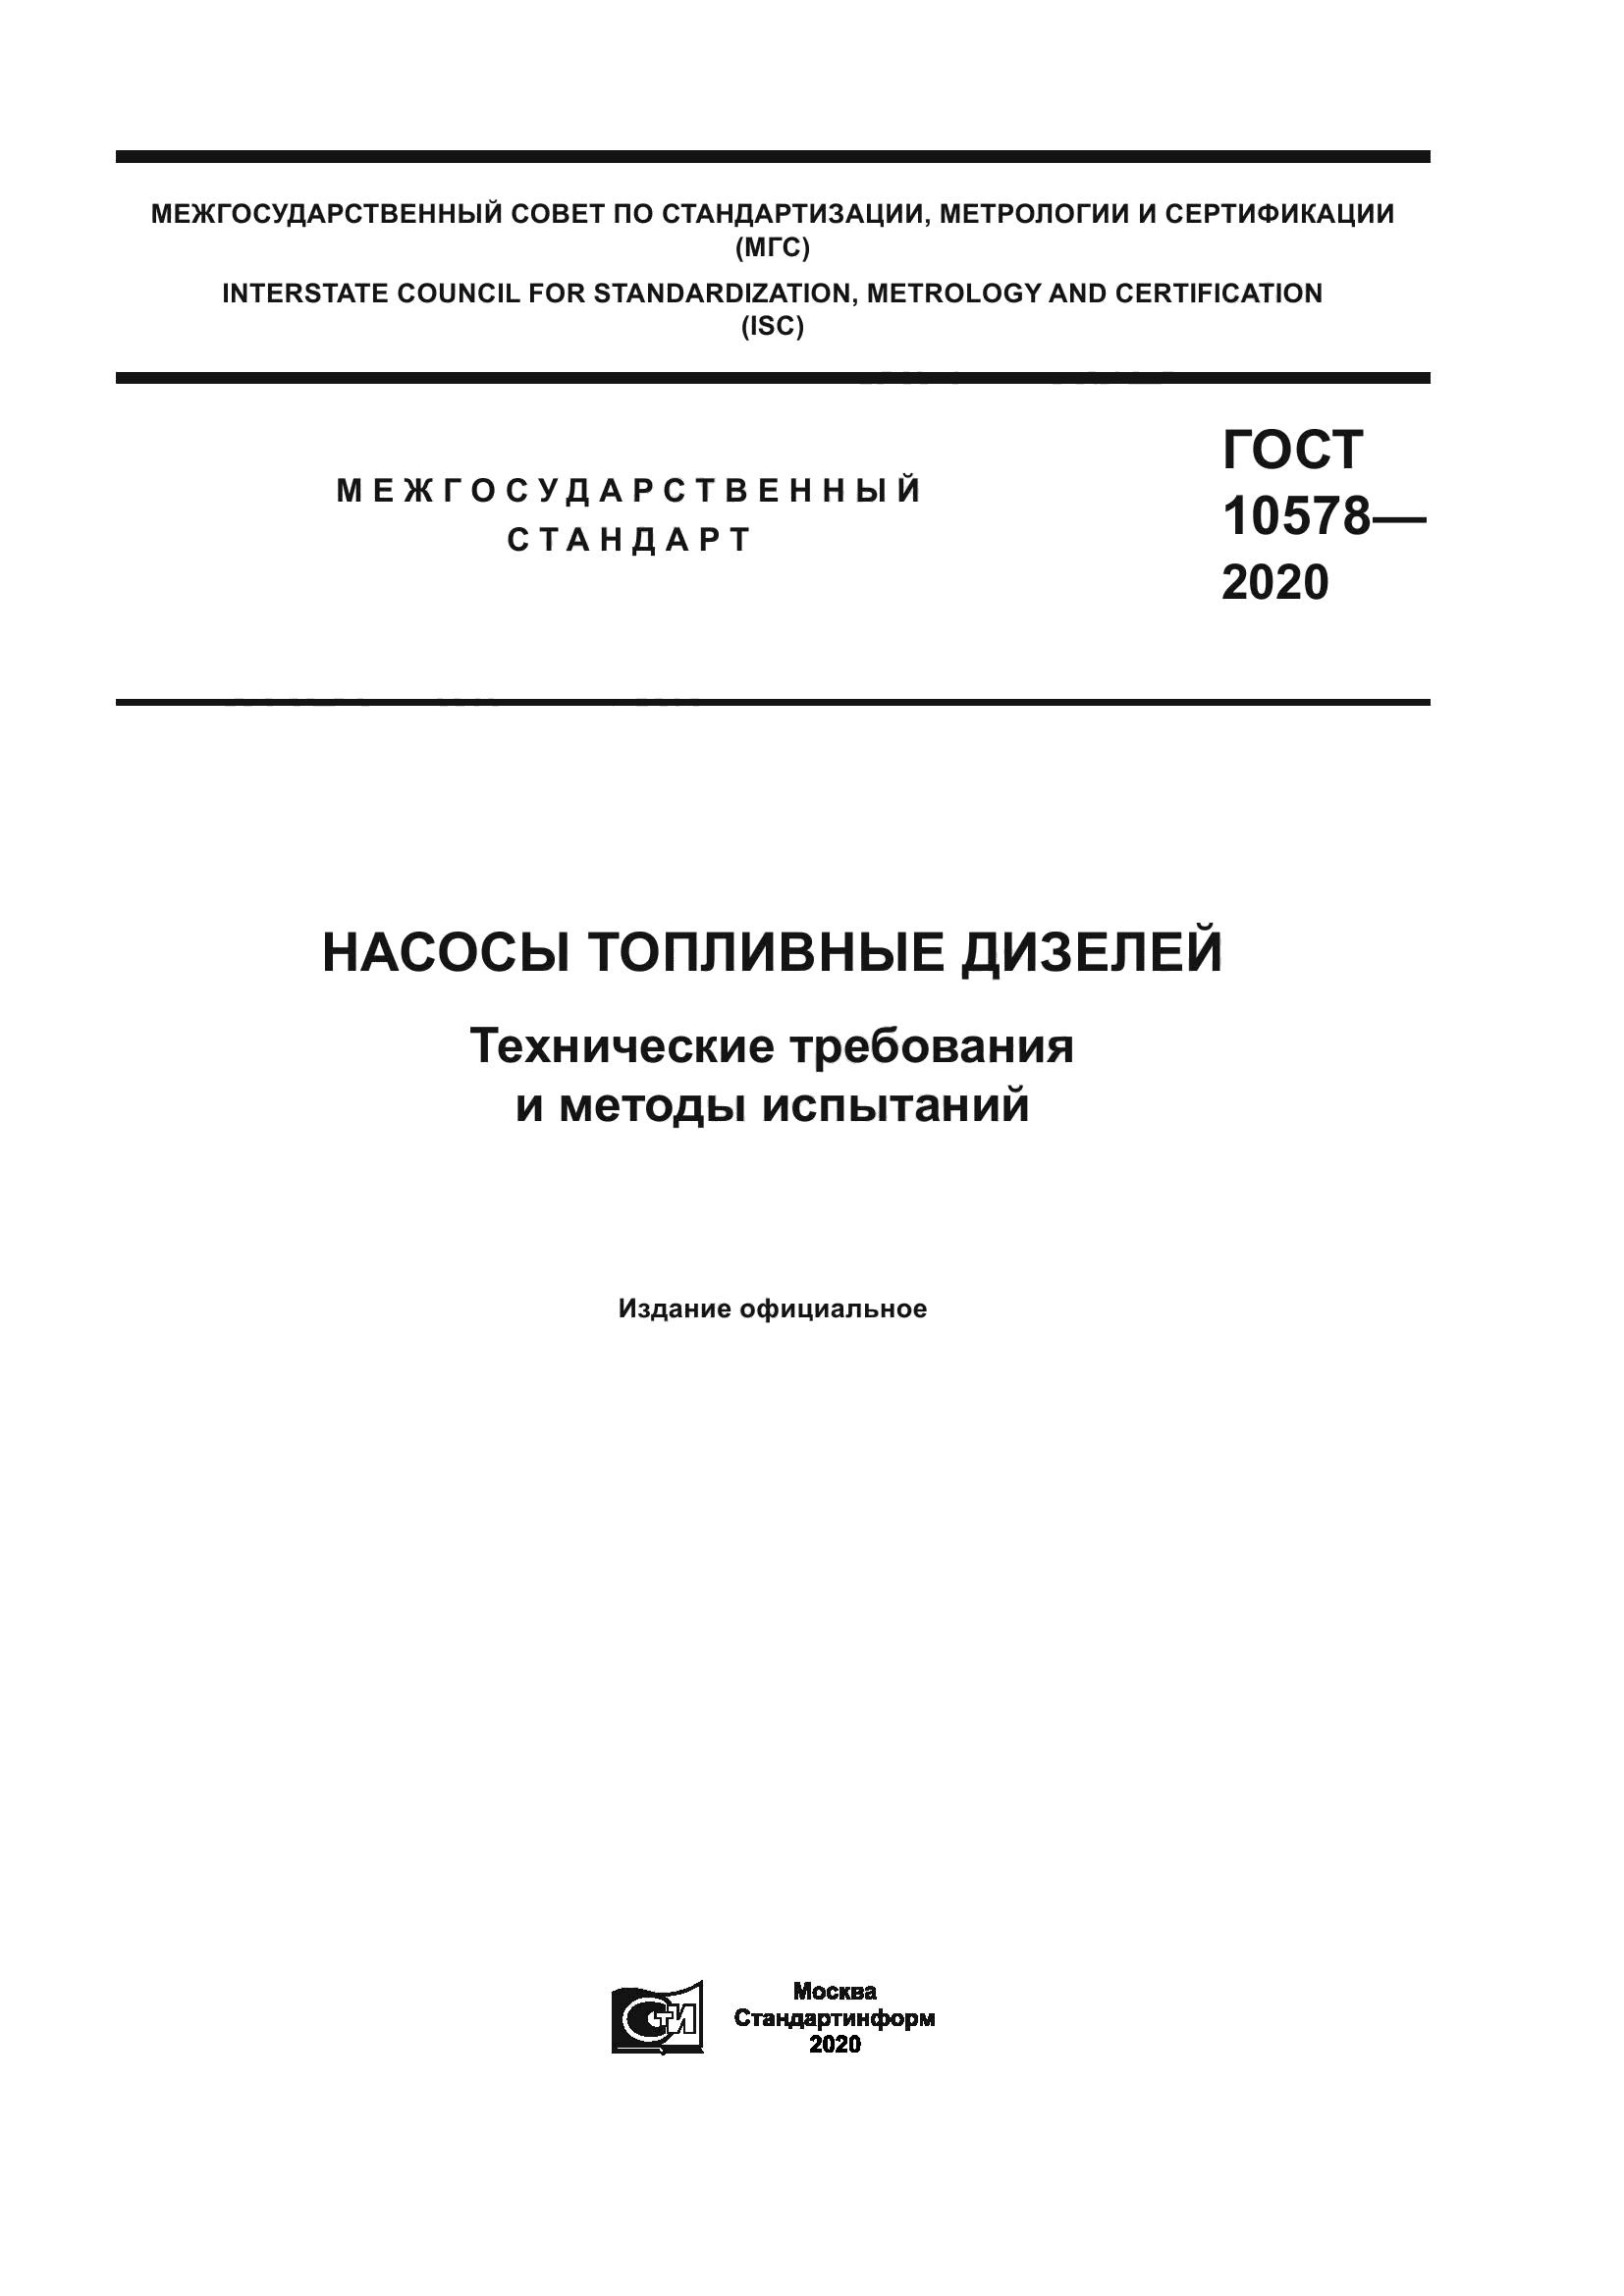 ГОСТ 10578-2020